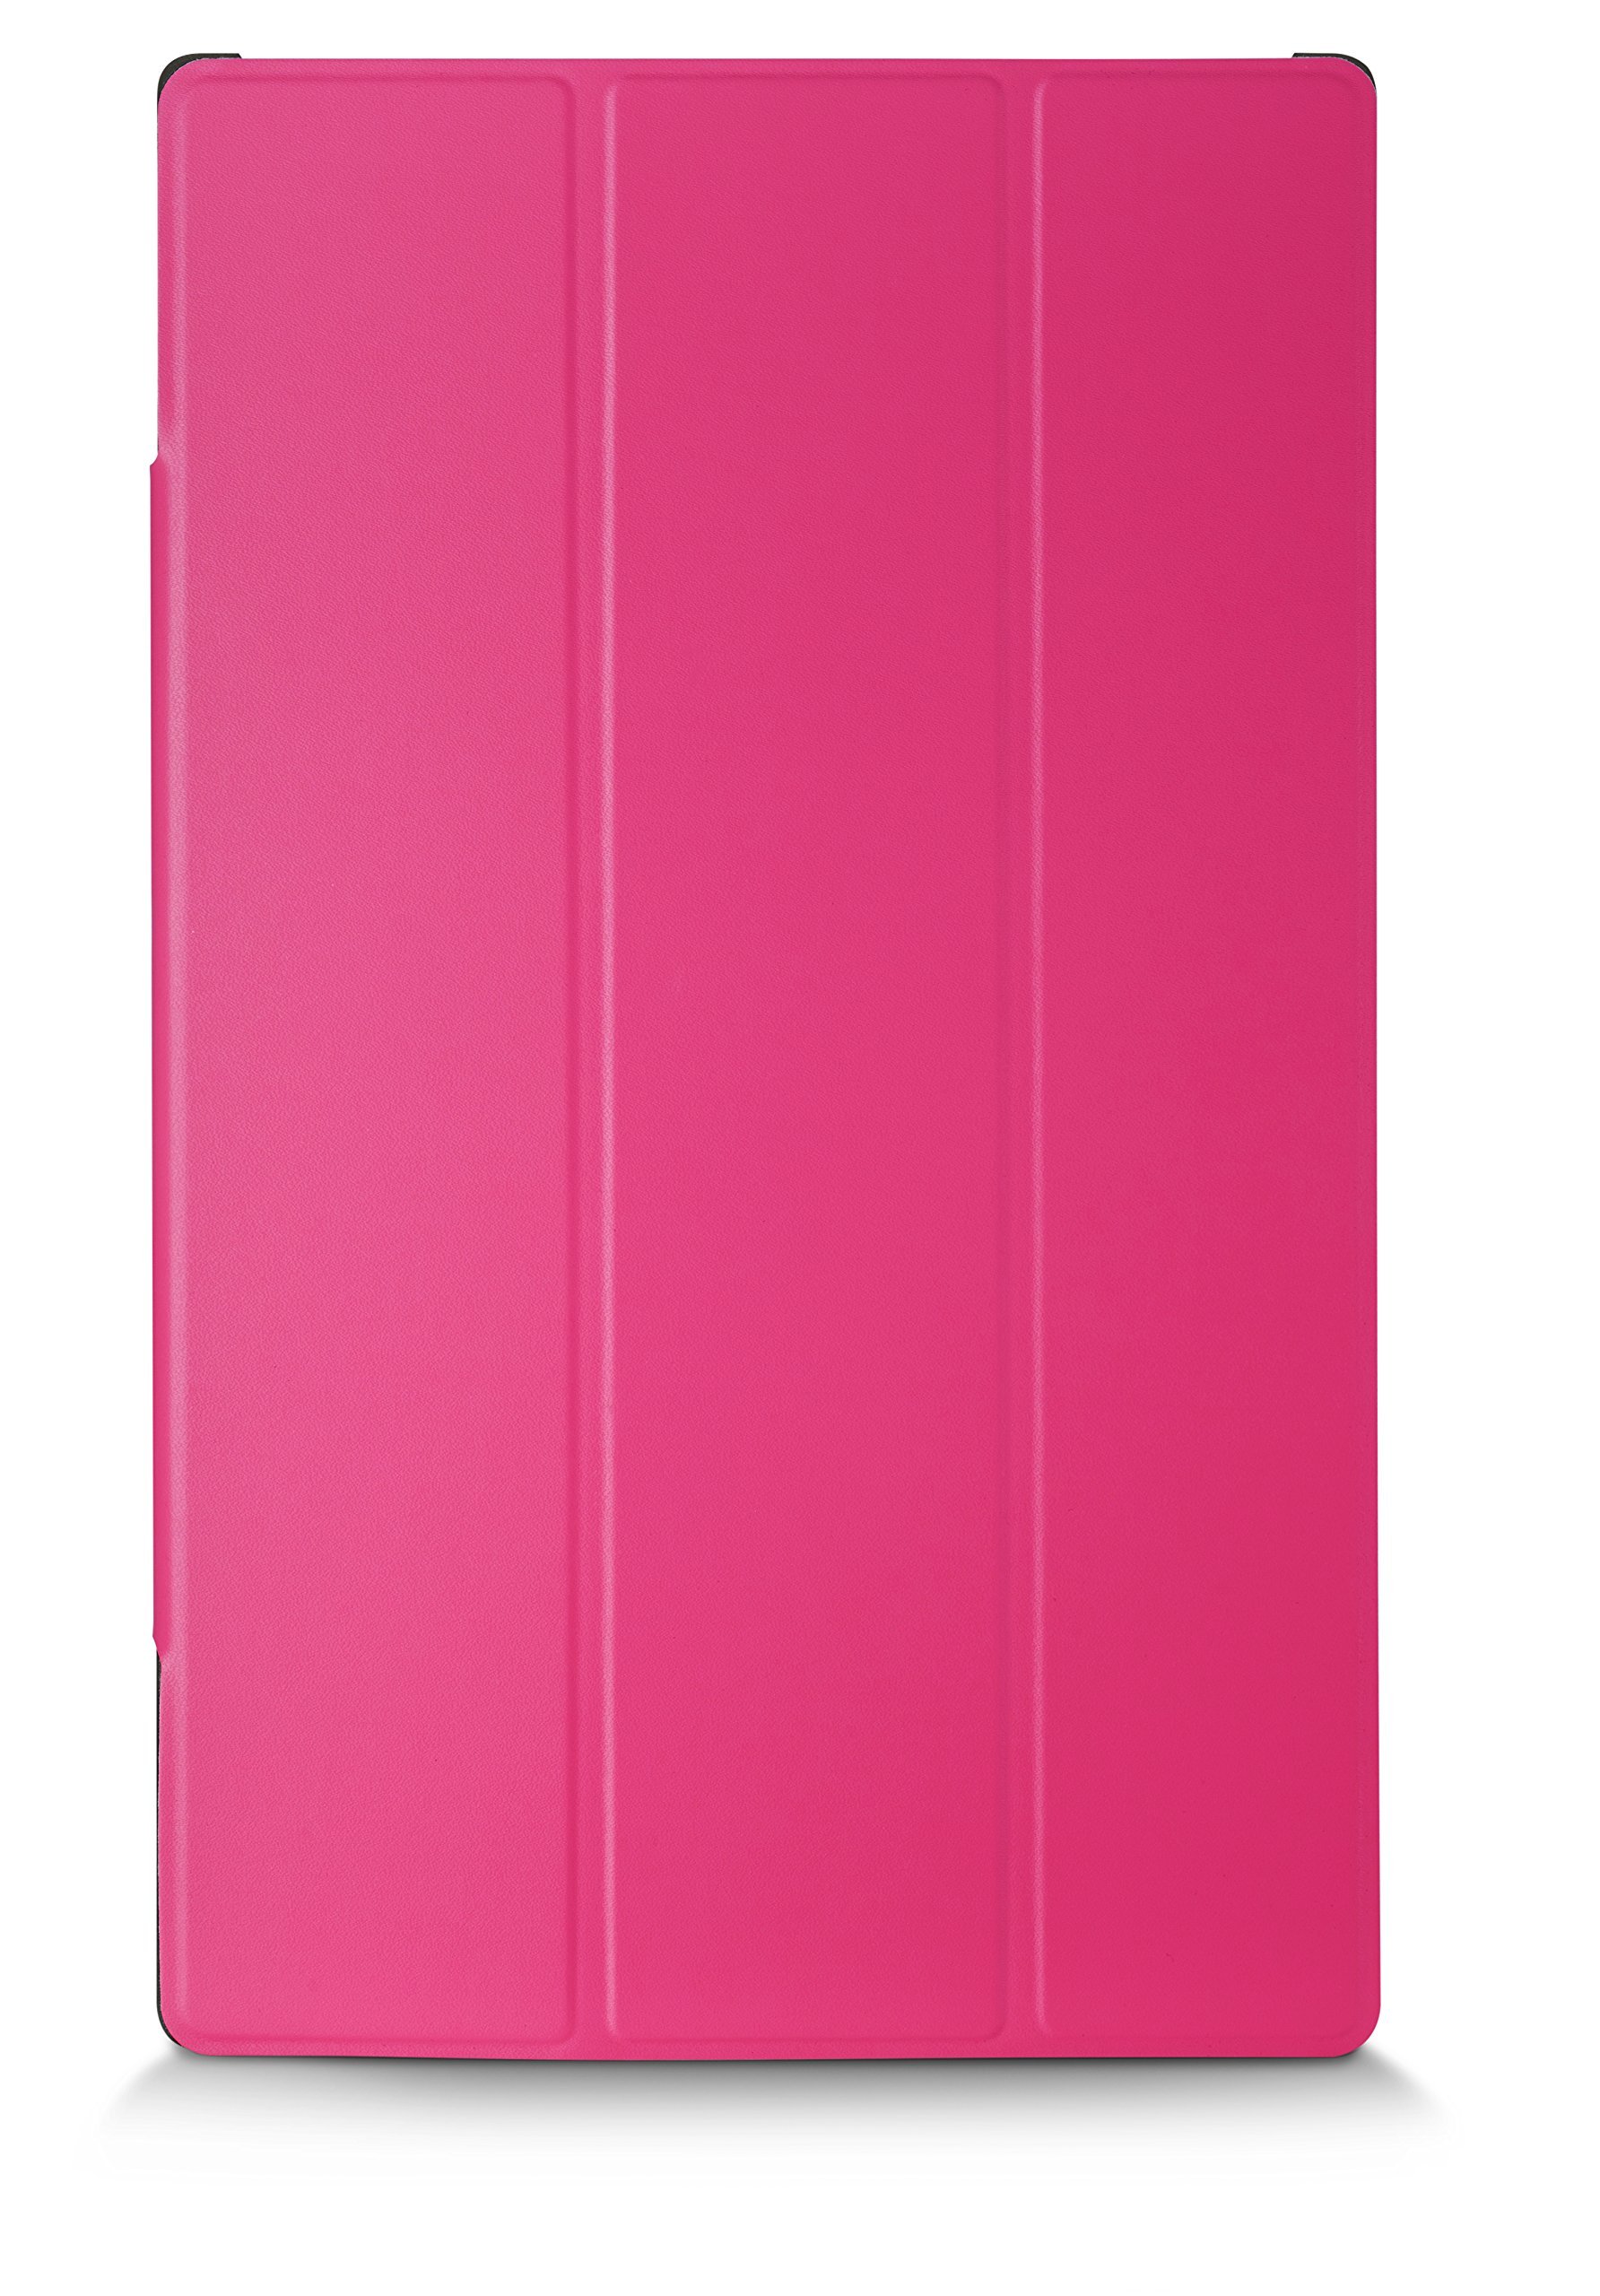 NuPro Fire HD 10 Slim Standing Case (5th Generation - 2015 release), Pink